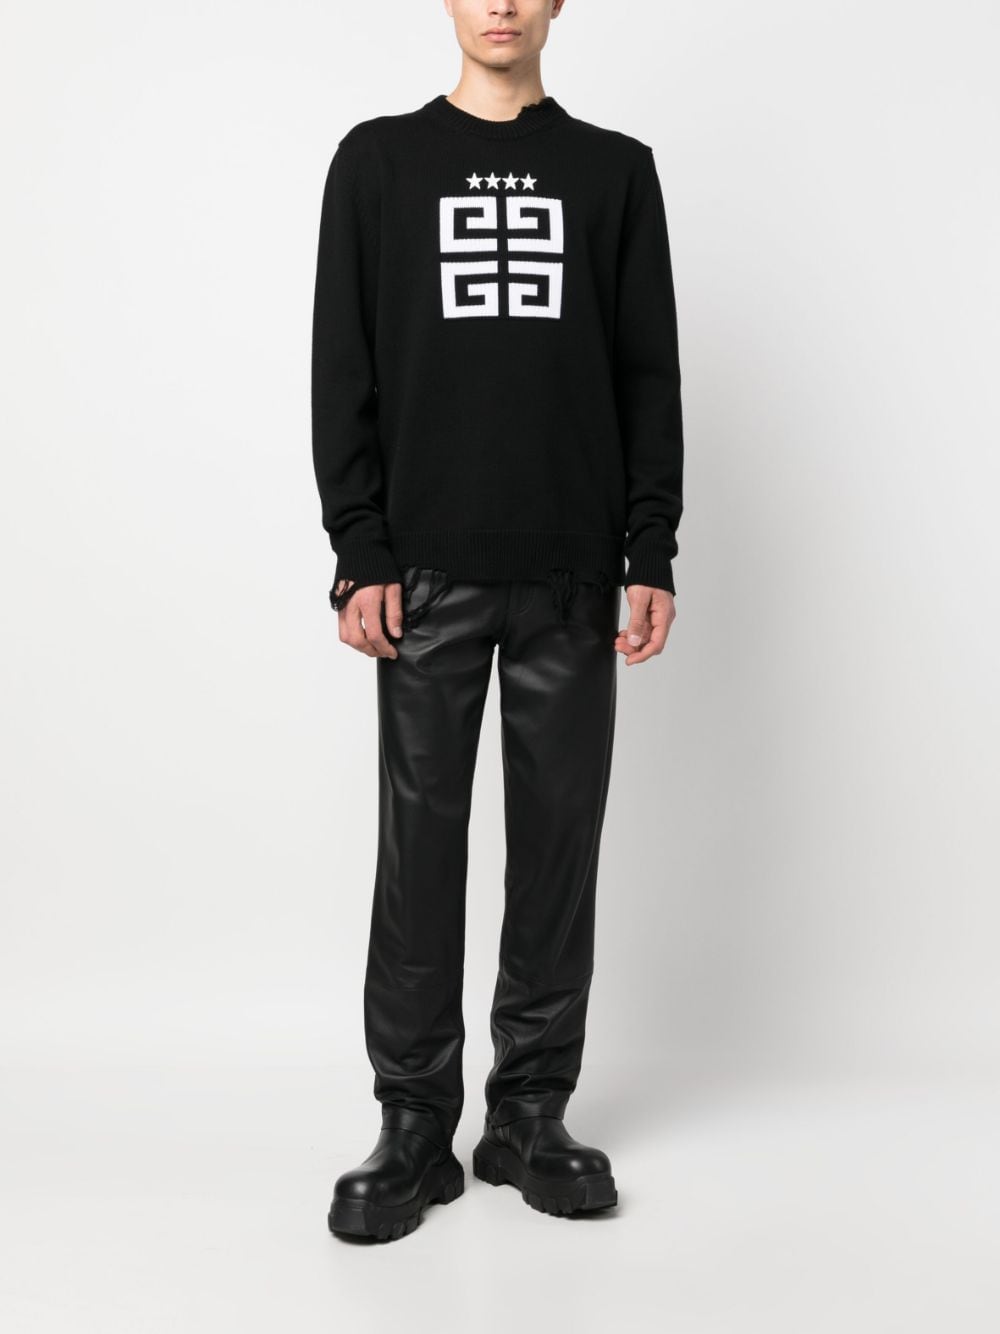 4G-motif distressed cotton sweatshirt